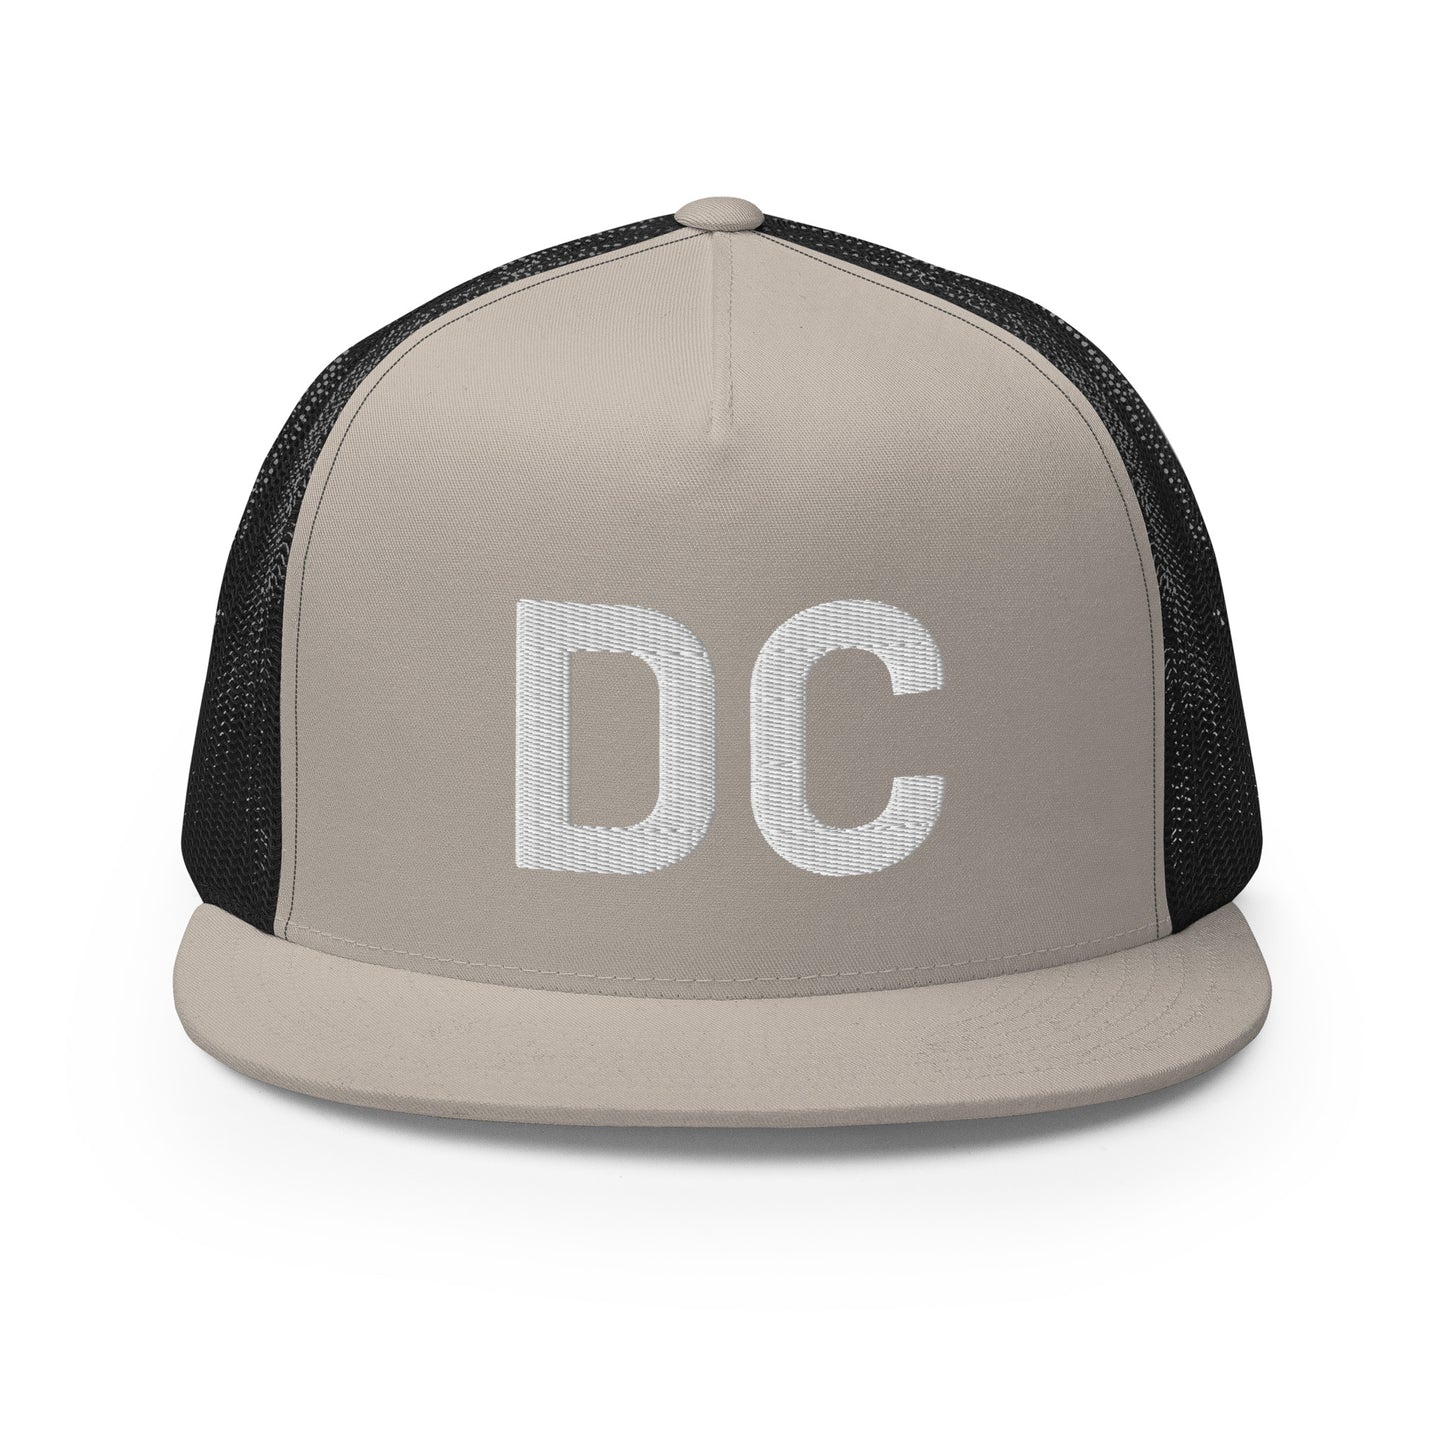 DC Trucker Hat